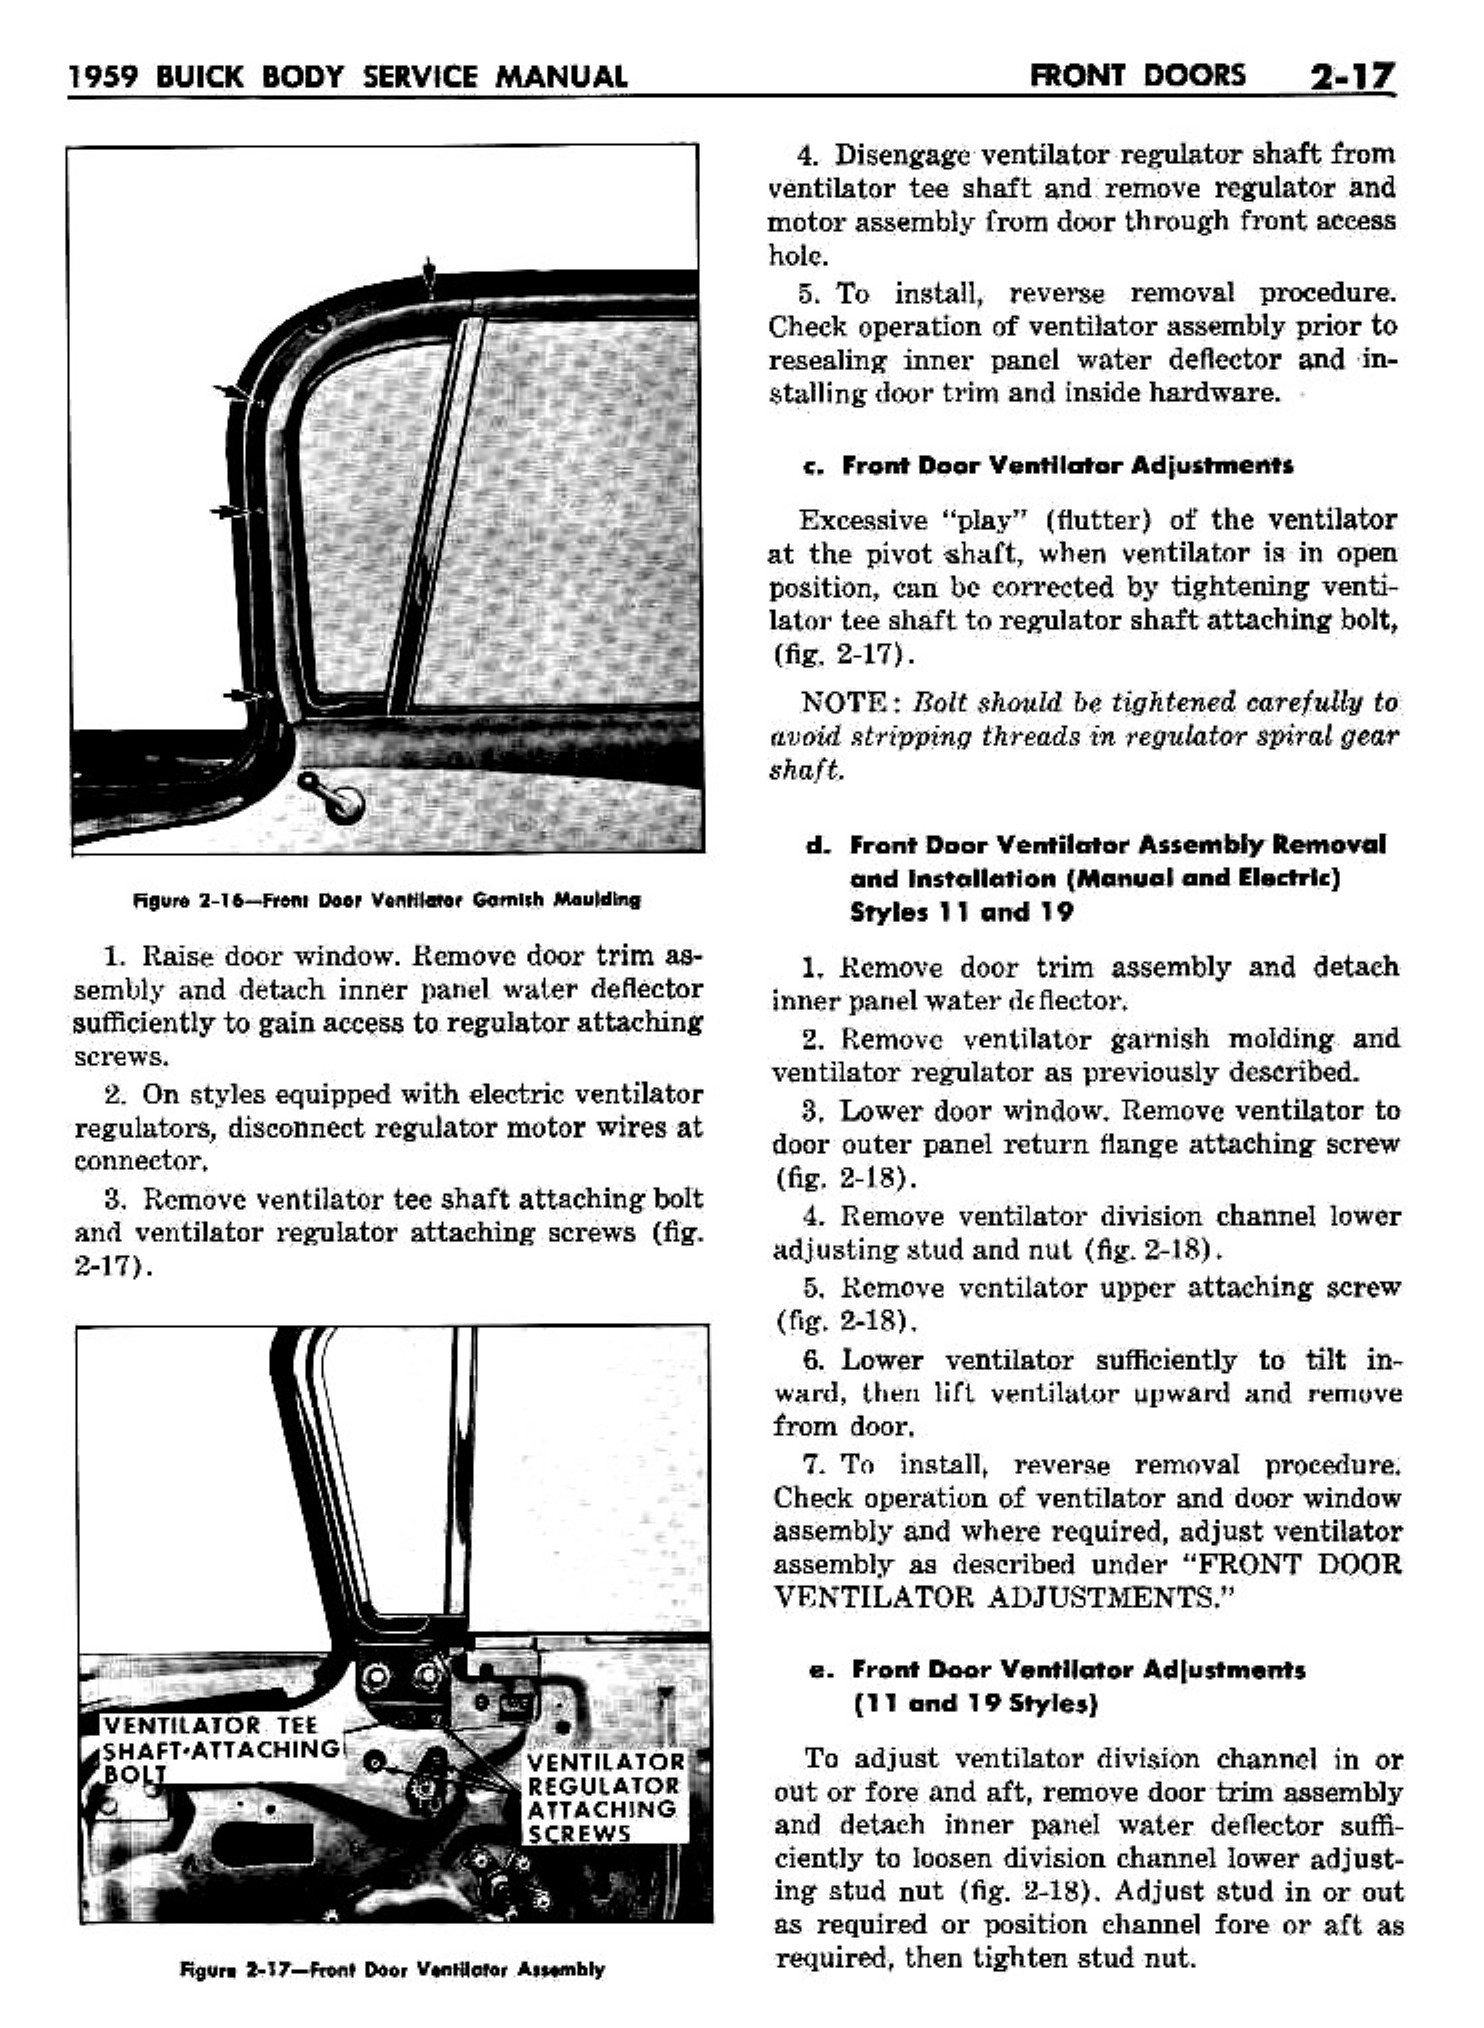 n_03 1959 Buick Body Service-Doors_17.jpg